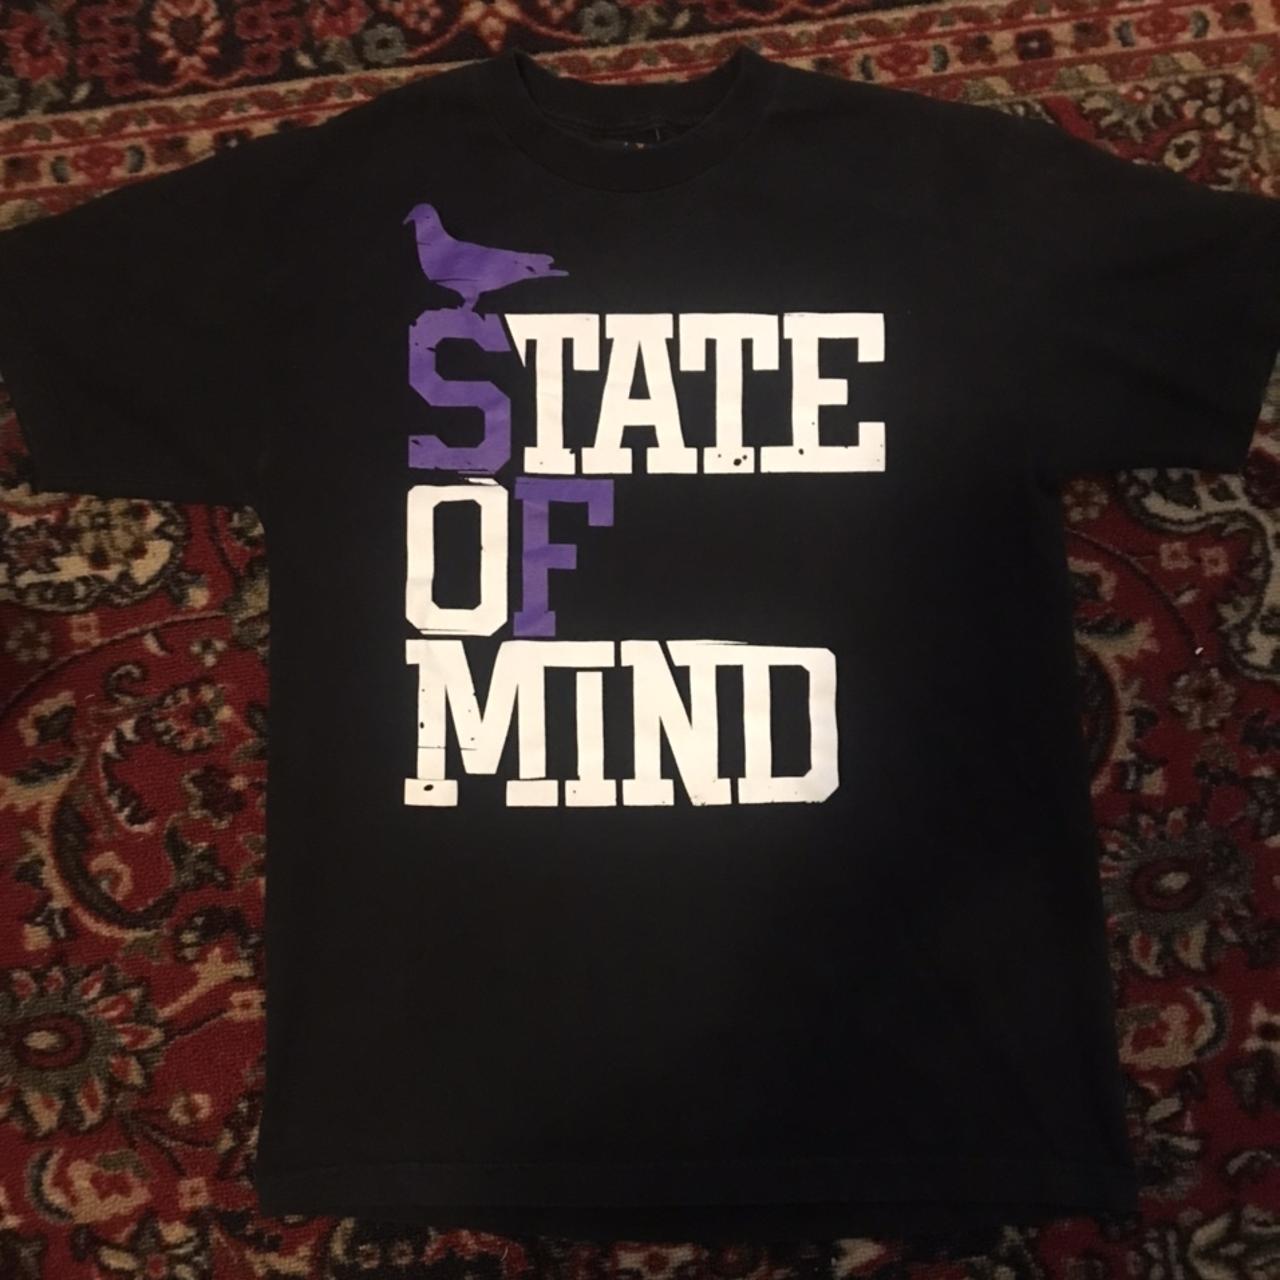 ADPT Men's Black and Purple T-shirt